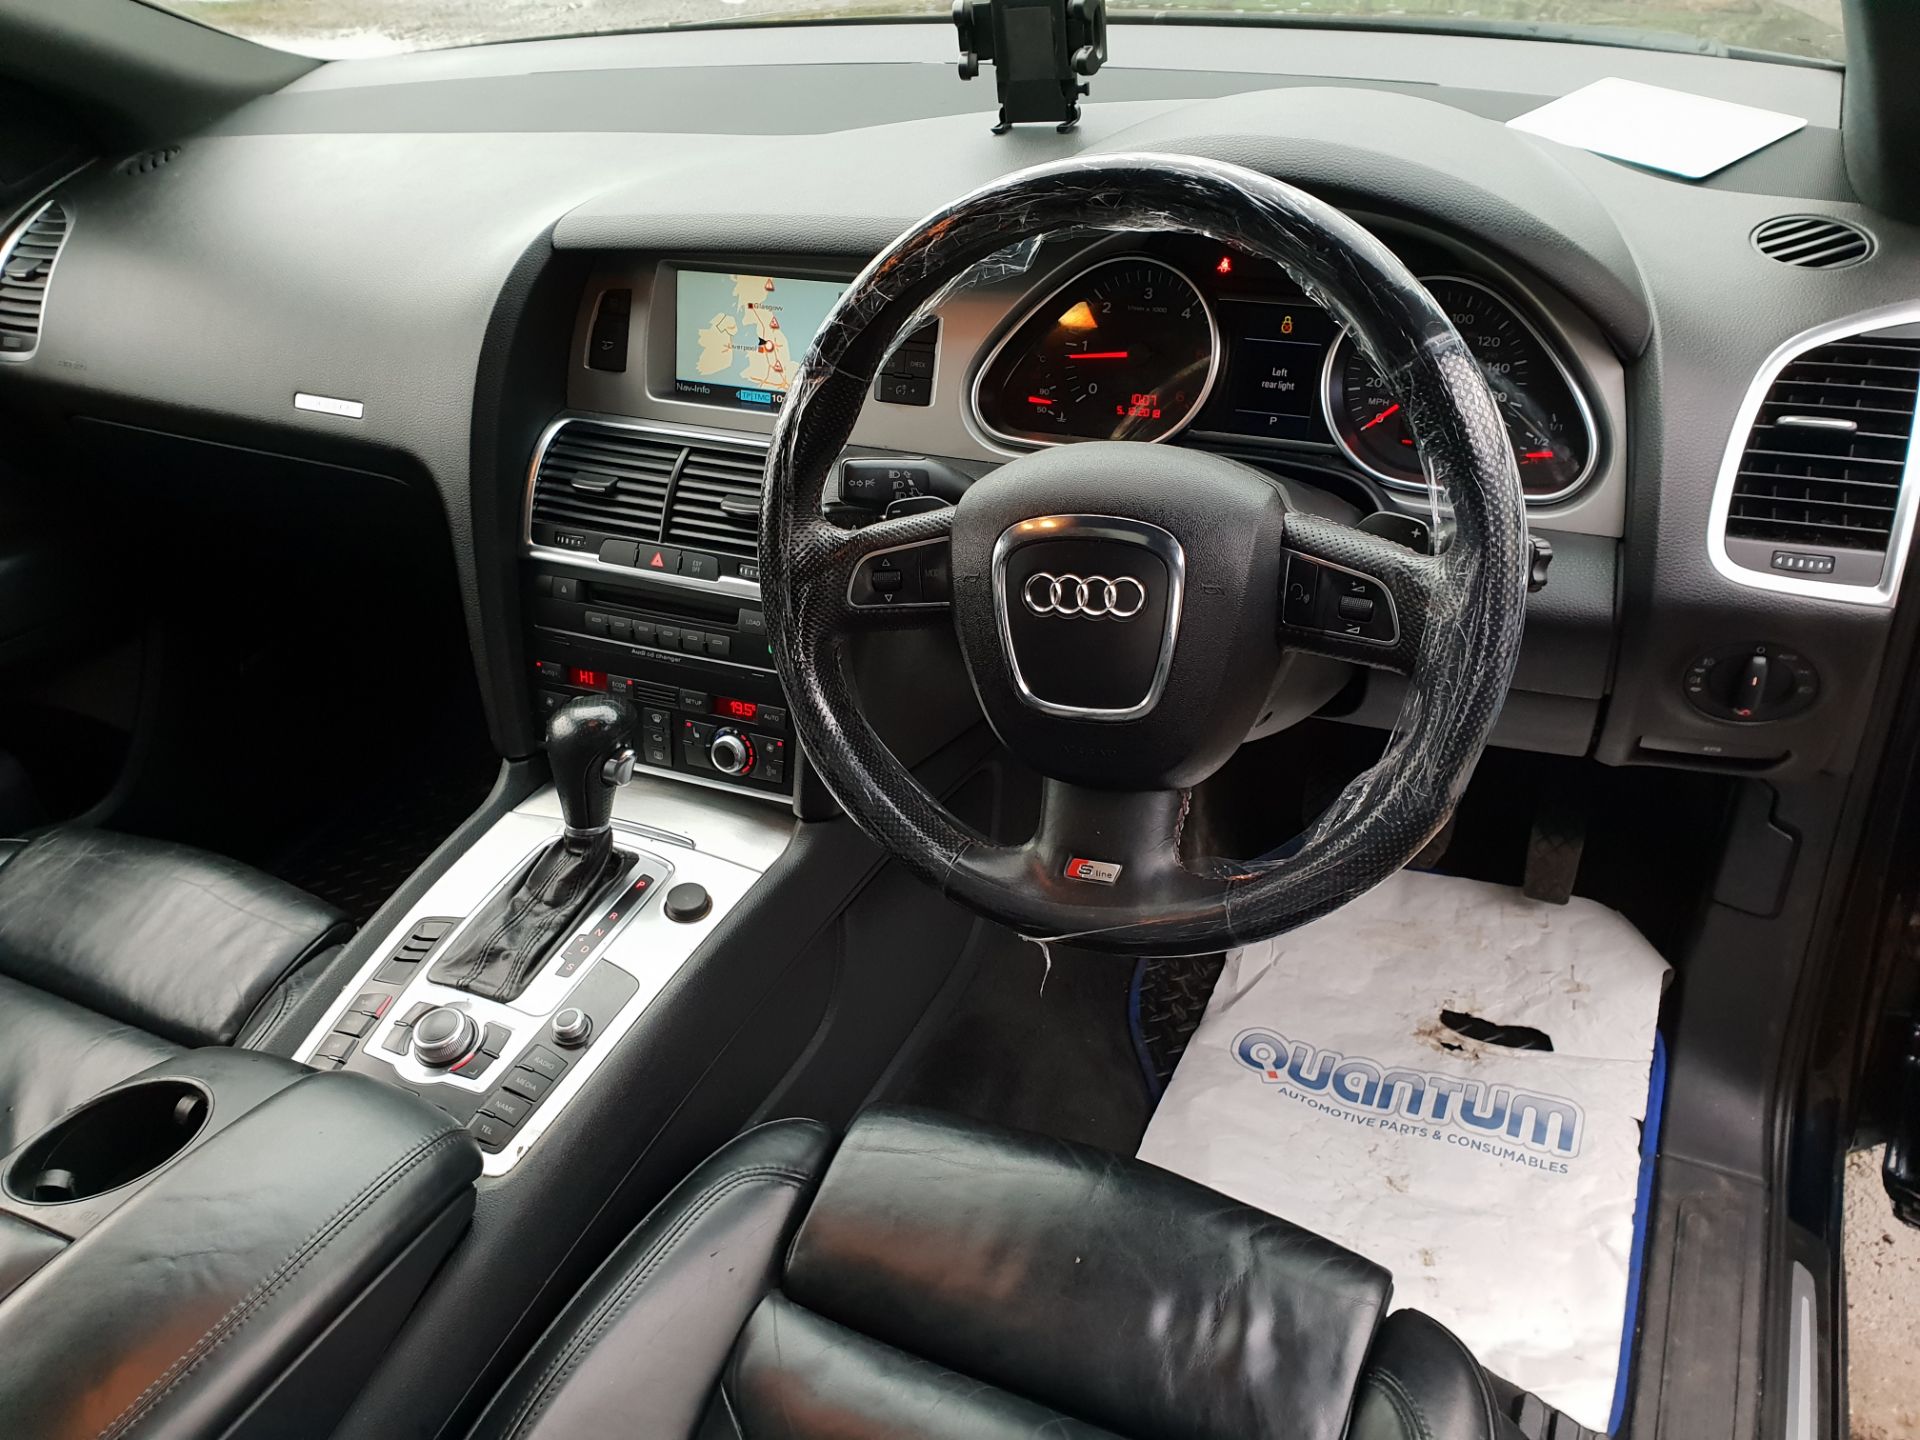 2009, Audi Q7 S-line 3.0 TDI - No VAT on hammer. - Image 8 of 10